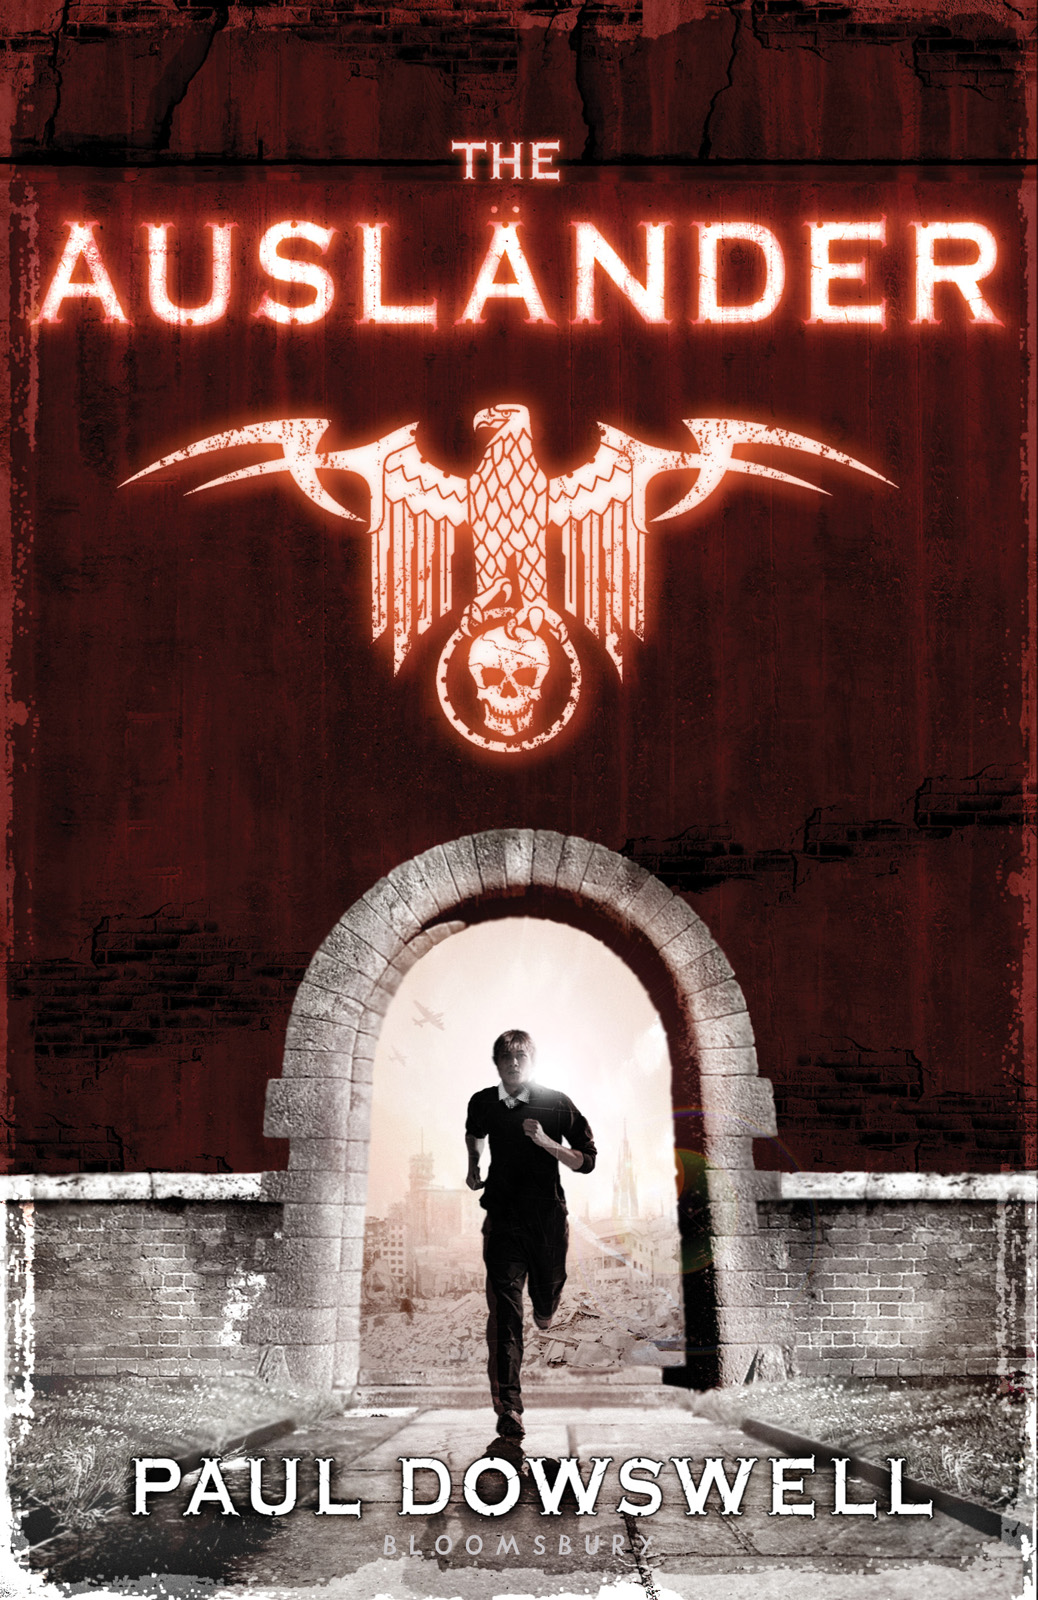 The Auslander (2009) by Paul Dowswell